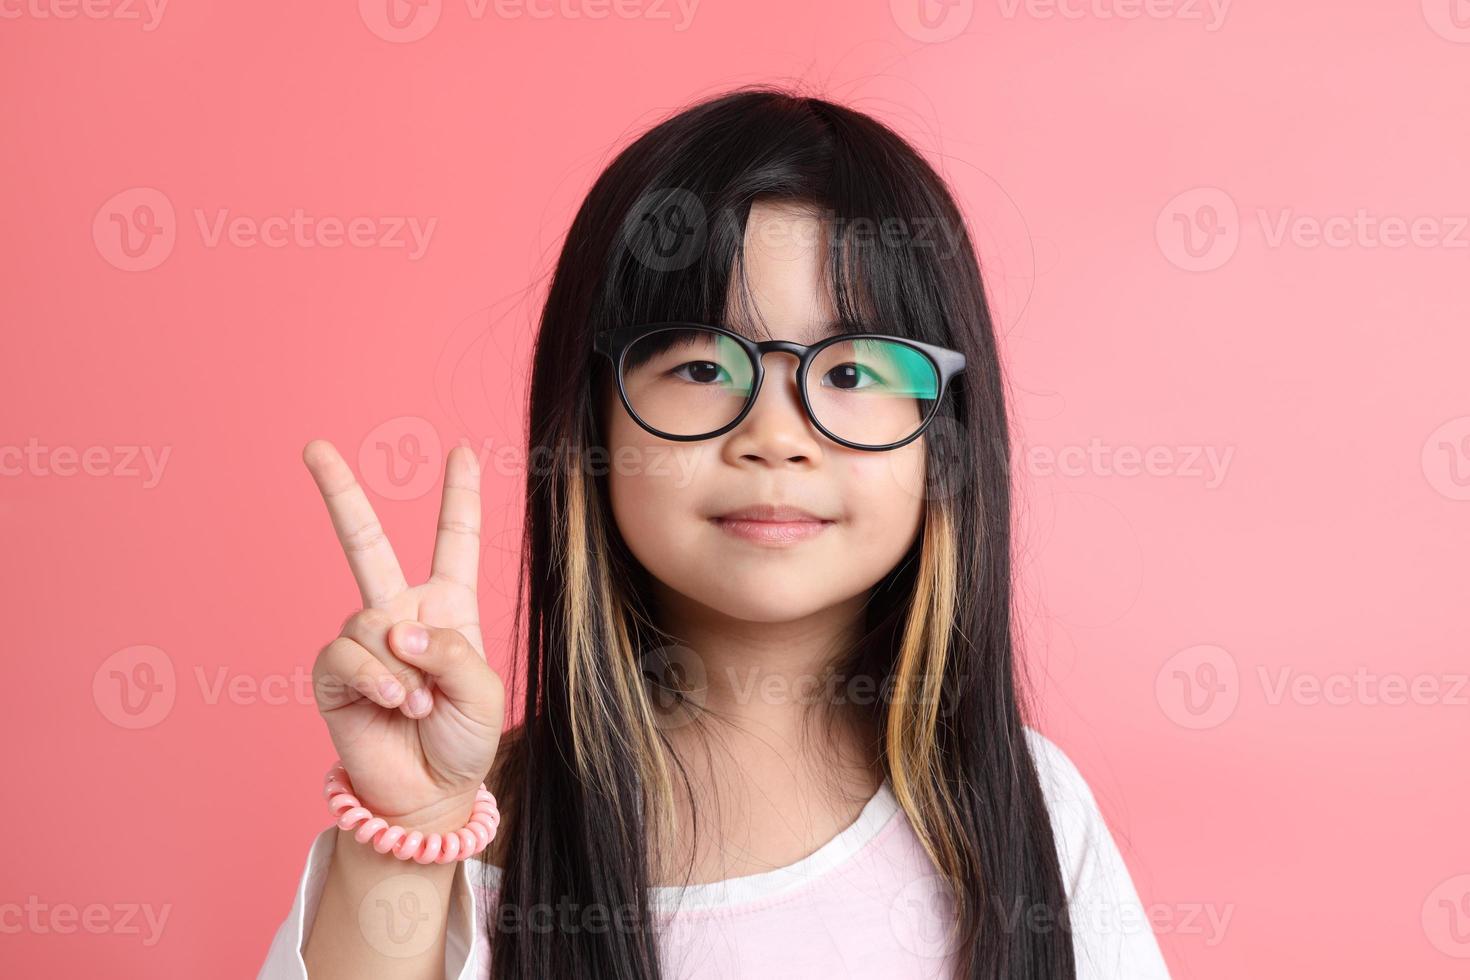 carina ragazza asiatica foto